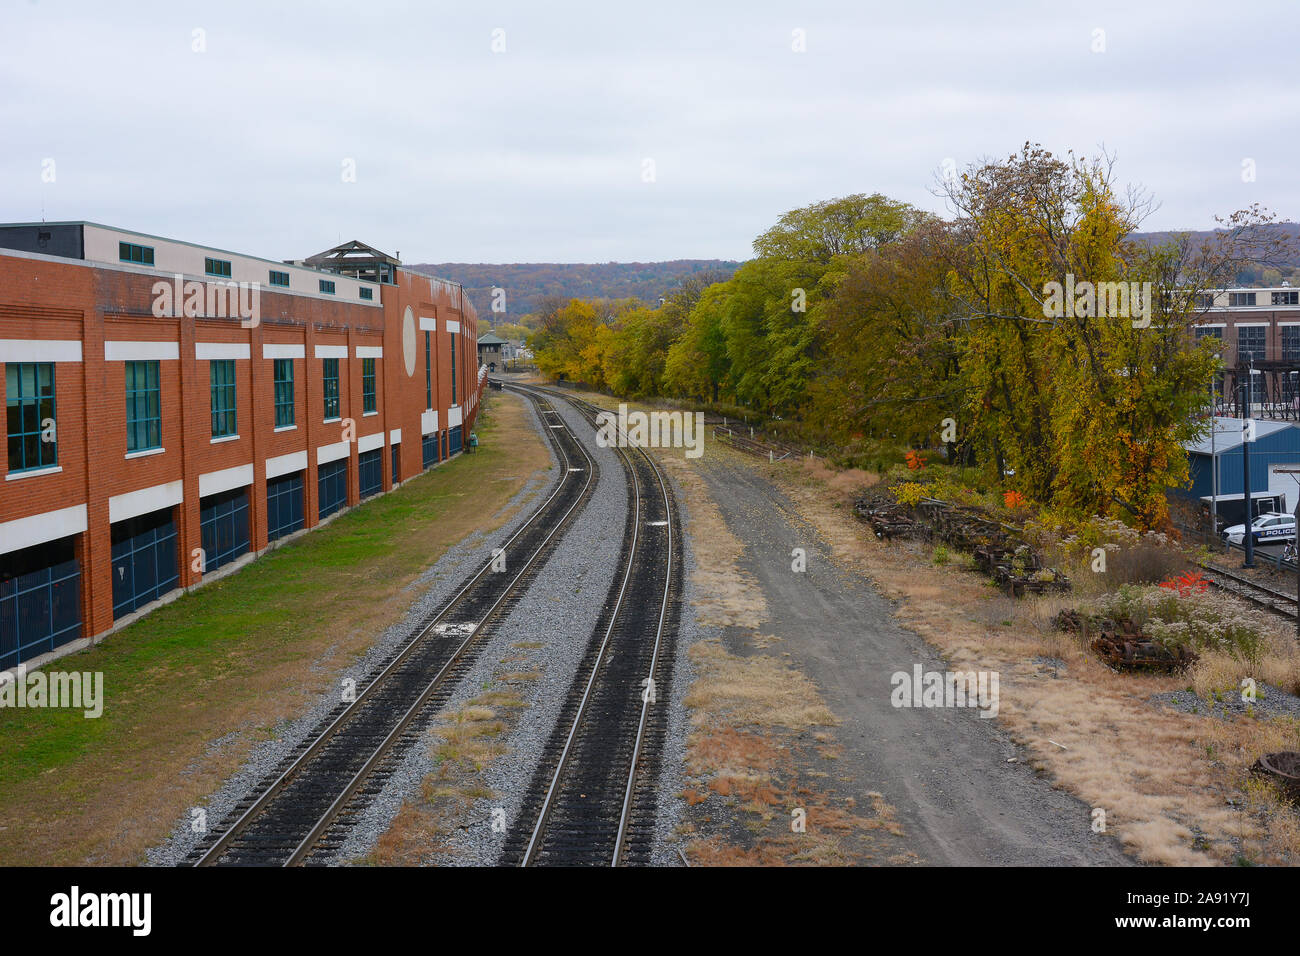 SCRANTON, PENNSYLVANIA - 30 OCT 2019: Railroad tracks behind the Marketplace at Steamtown. Stock Photo